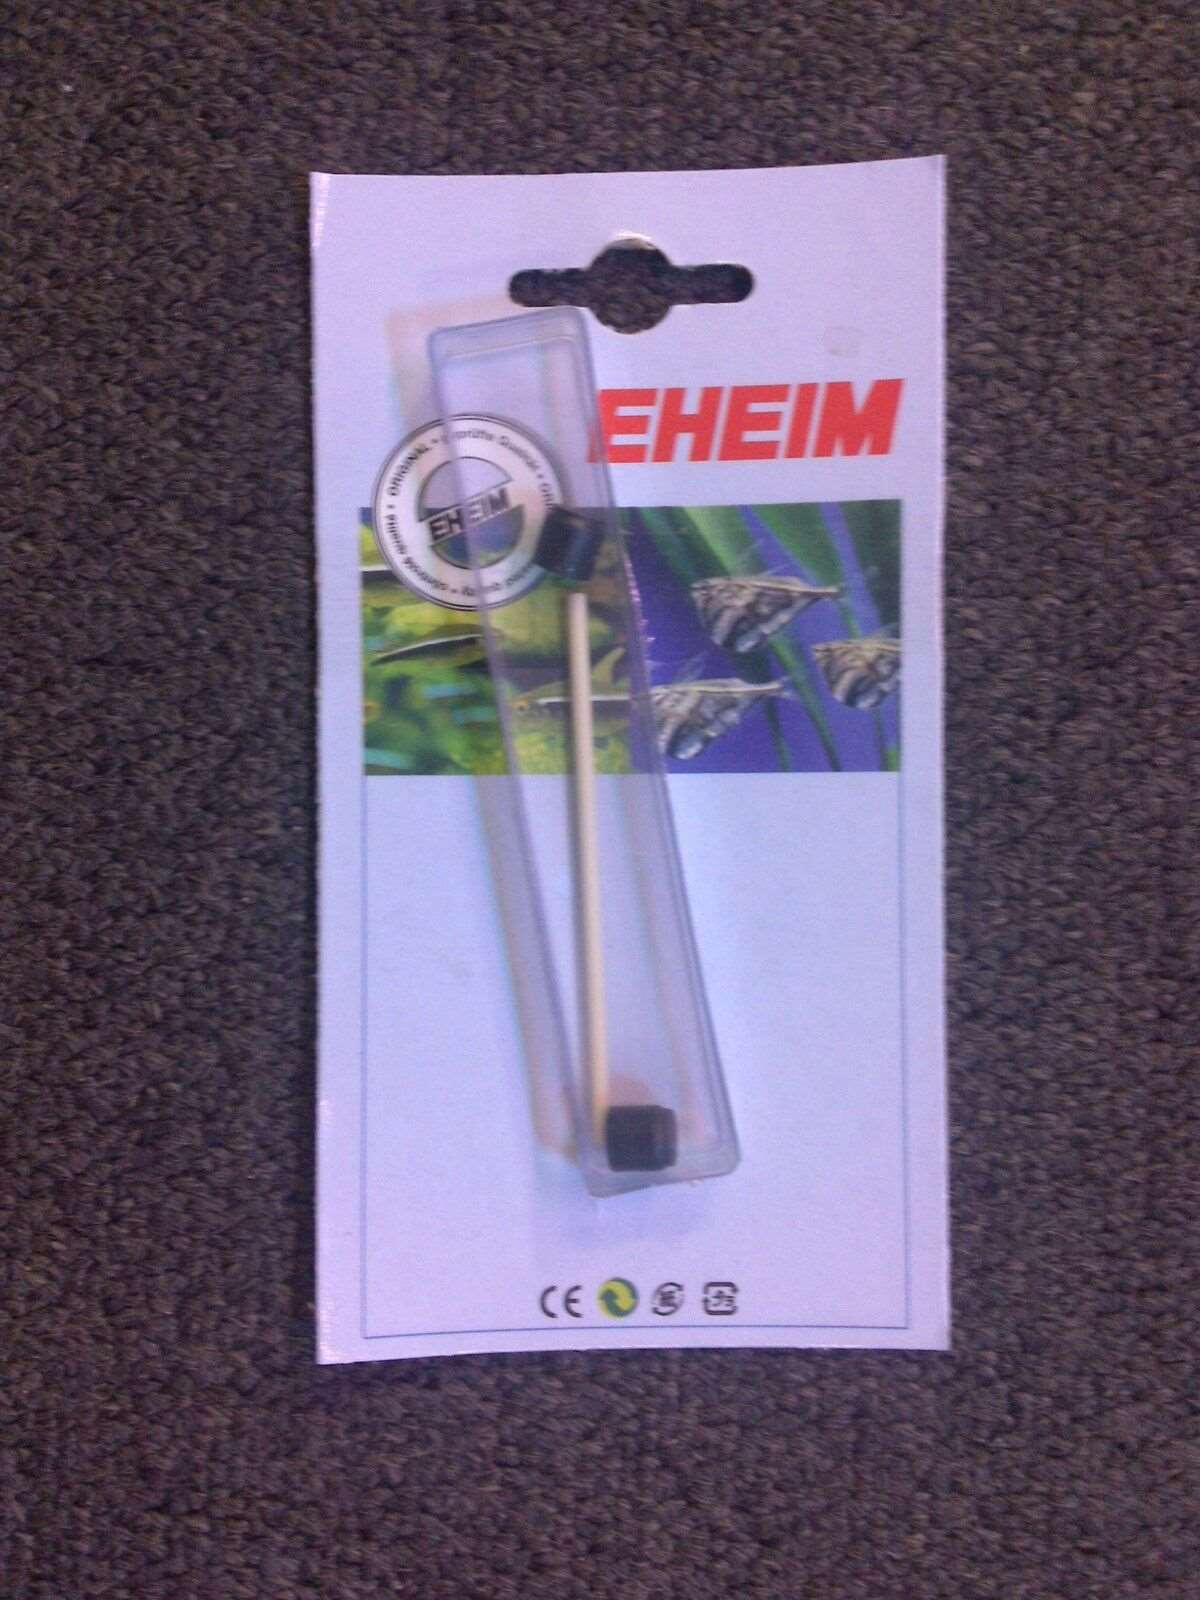 Eheim impeller shaft 7433720 to suit 1048, 2222 & 2224 Eheim filters